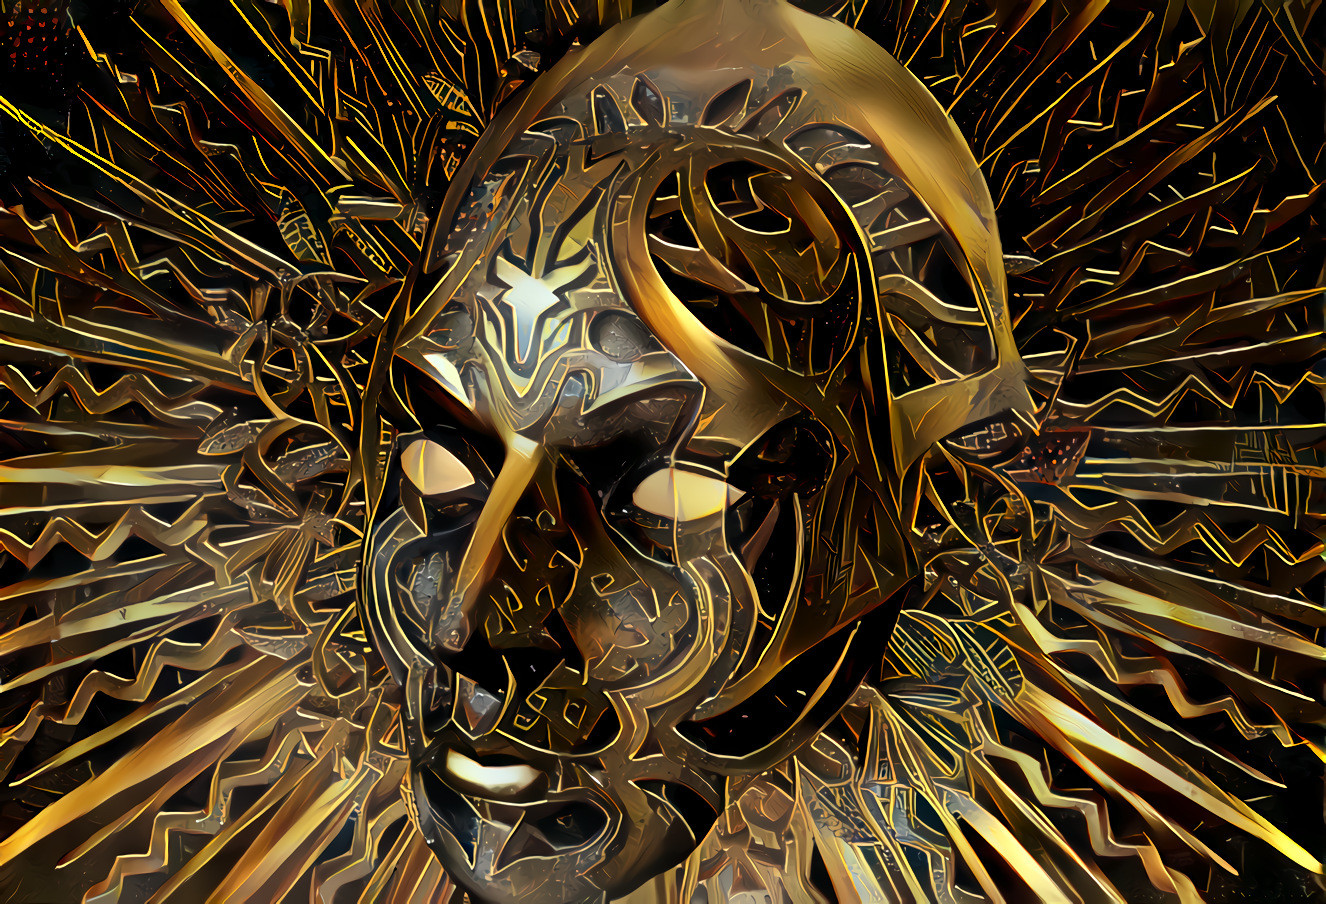 Bronze Mask of God Castlevania [1.2 MP]